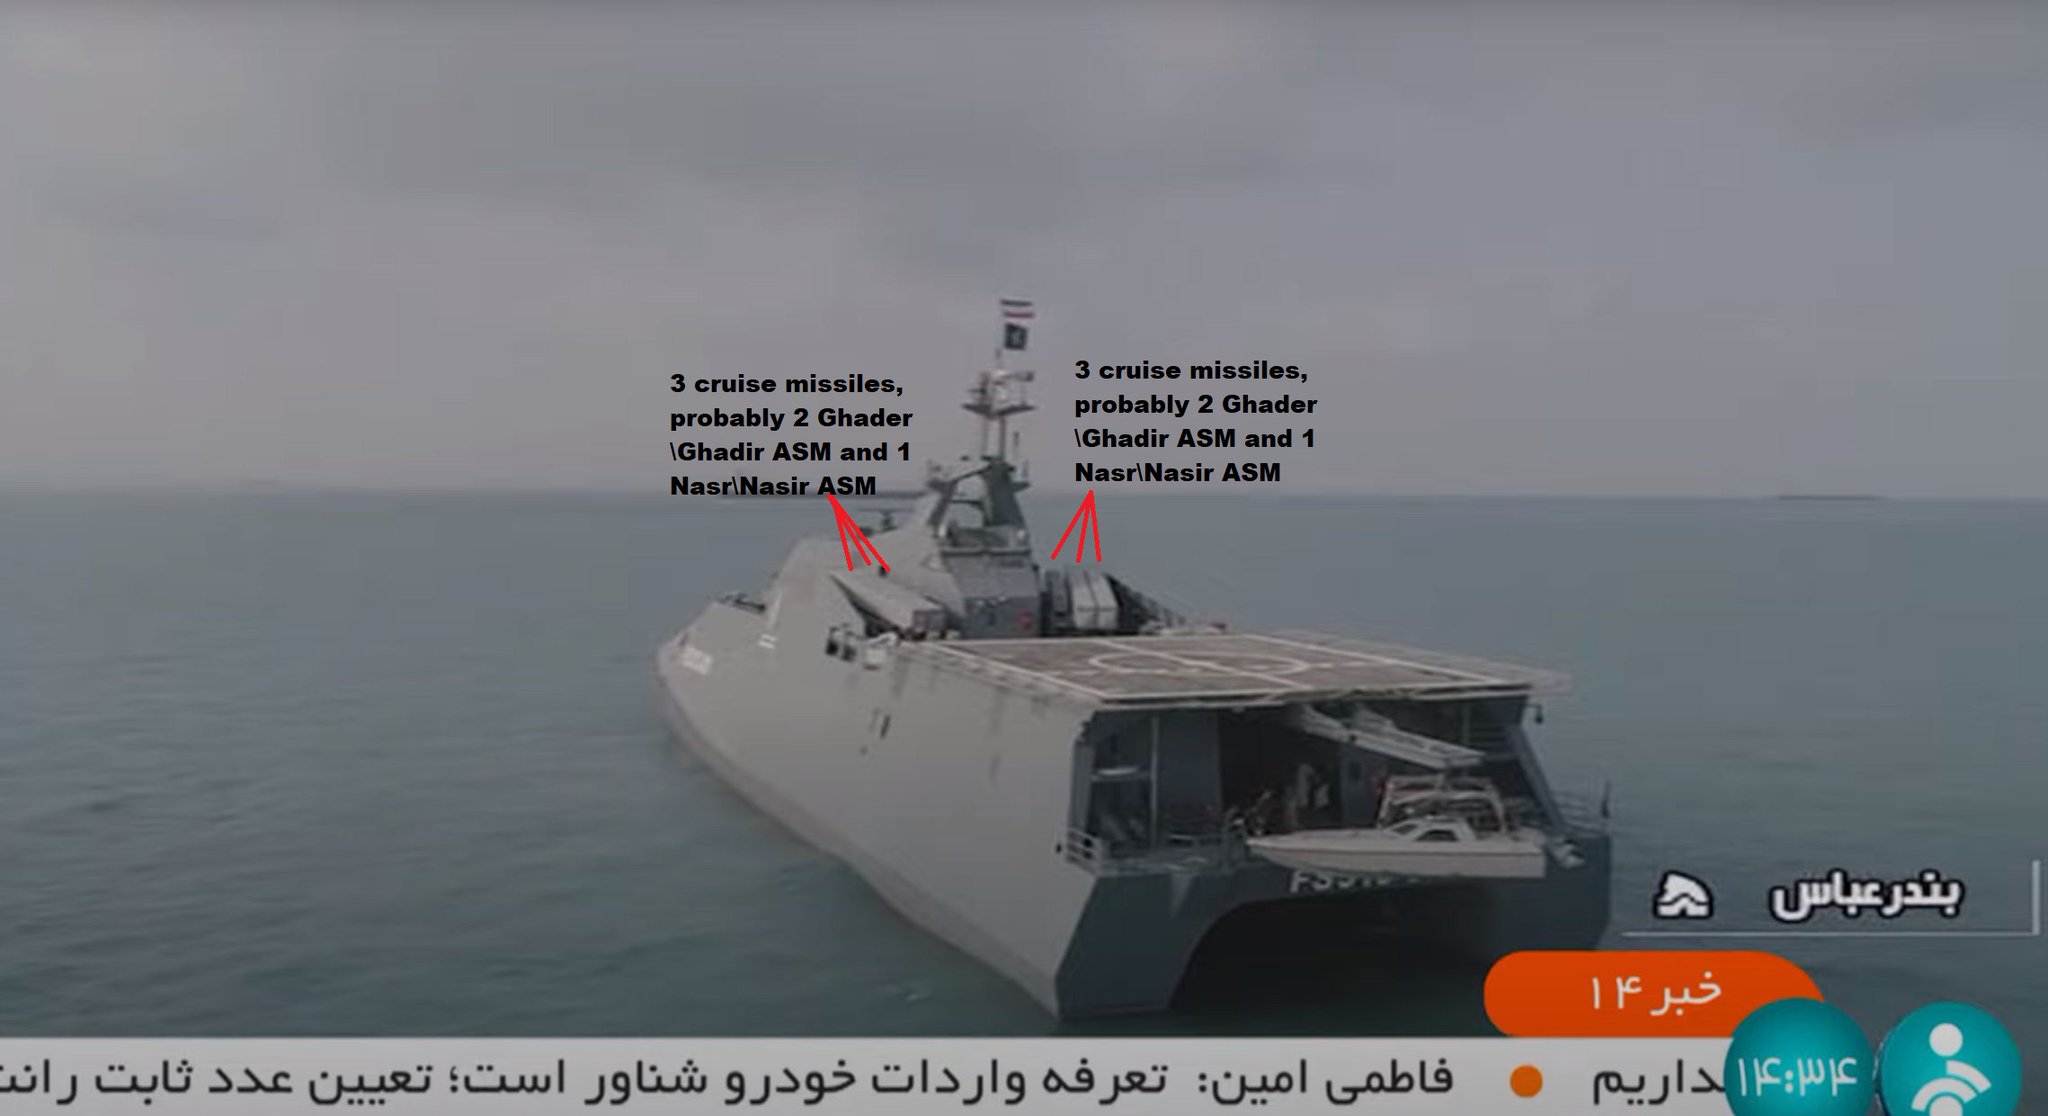 naval - Fuerzas Armadas de Iran - Página 16 Fb5YdyXXkAALQZd?format=jpg&name=large